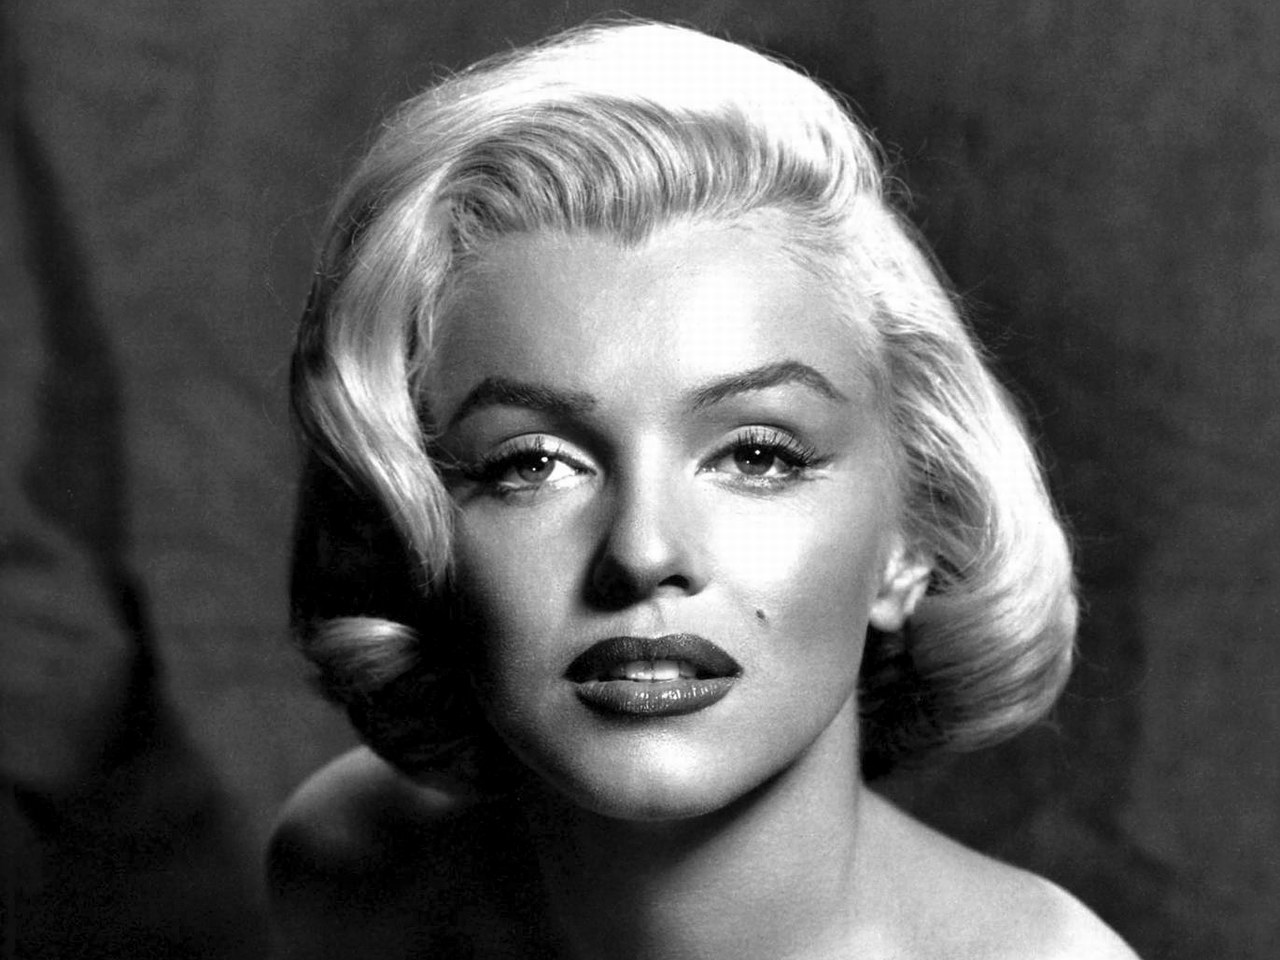 Marilyn Monroe Wallpaper HD Was Posted In